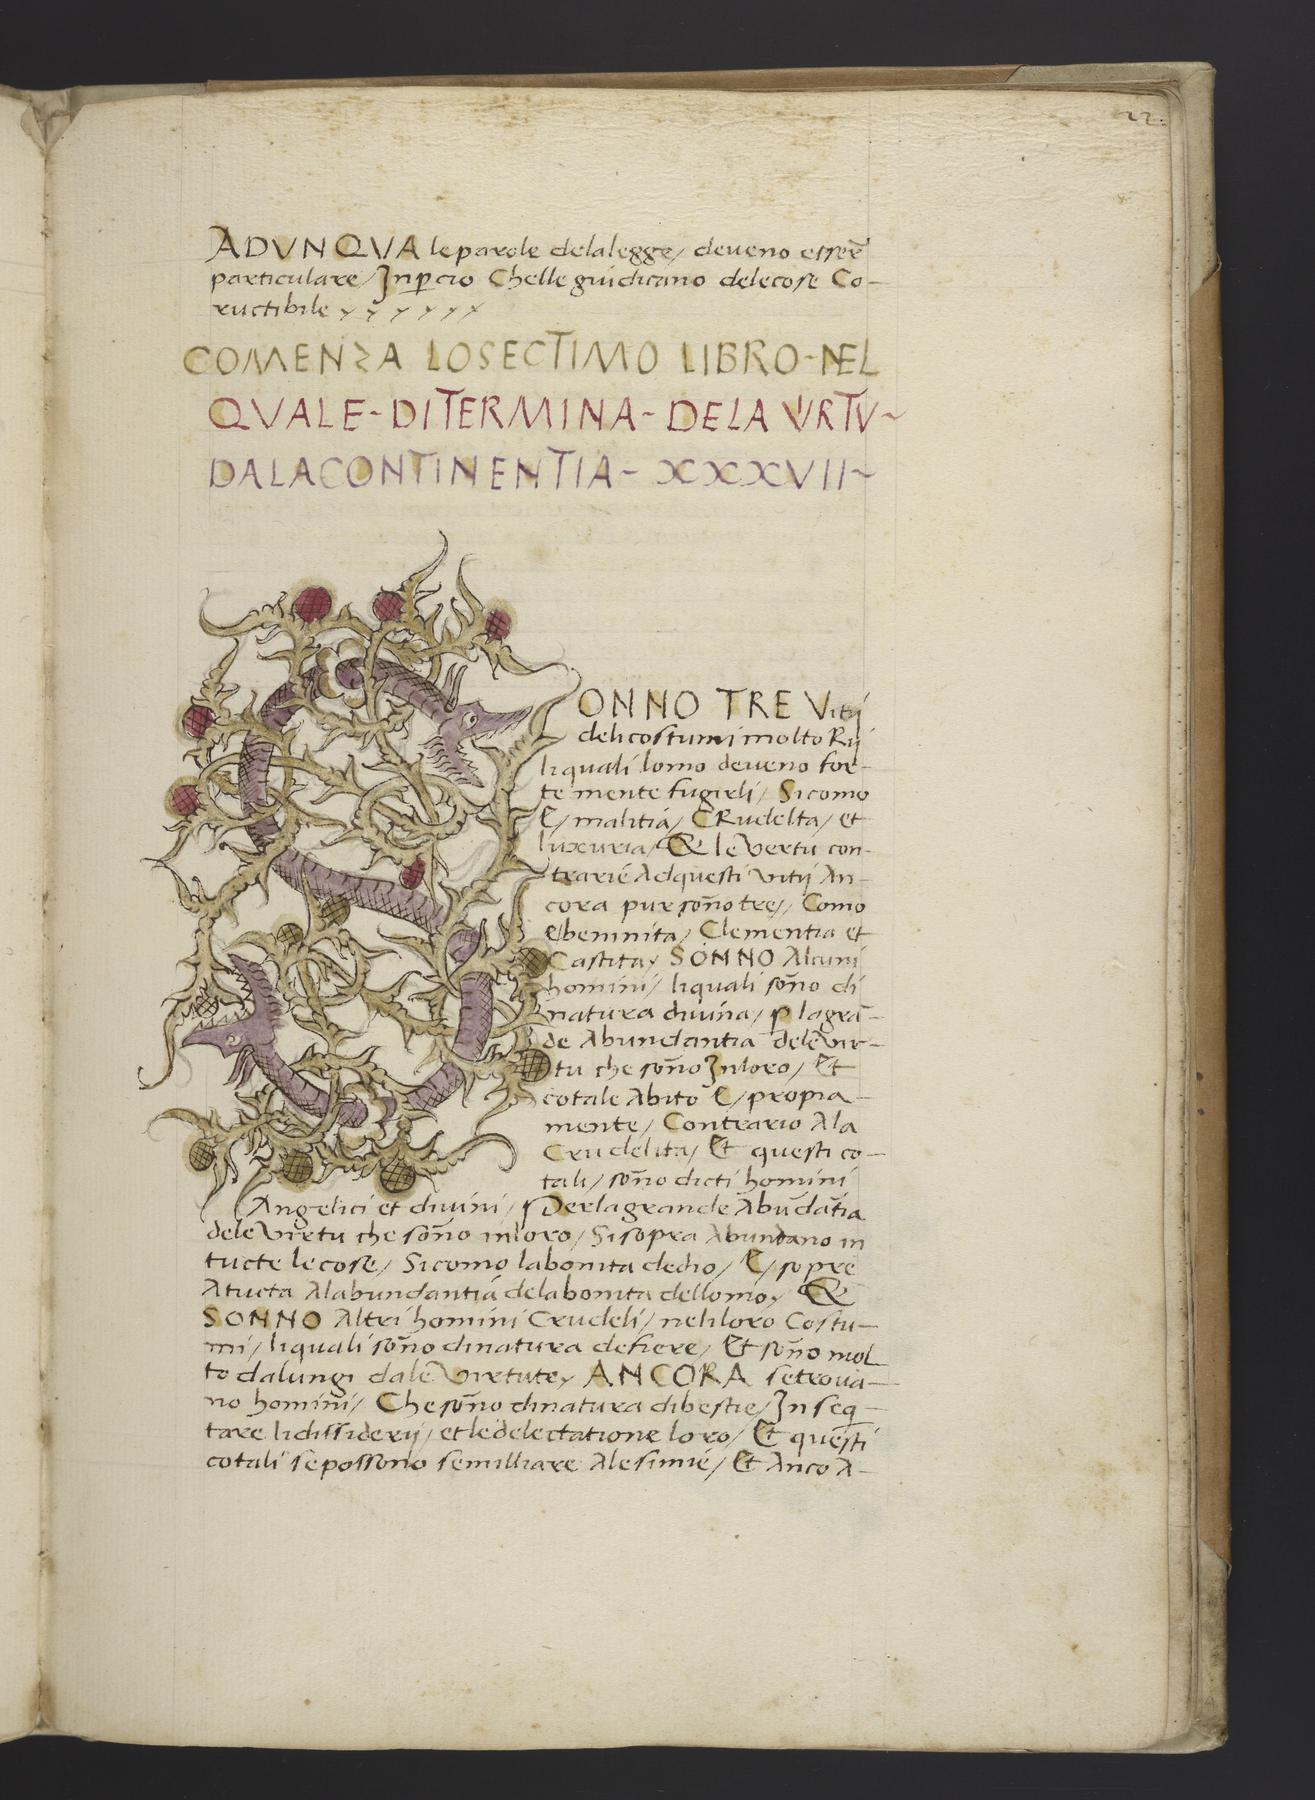 Coffee with a Codex: Italian Aristotle